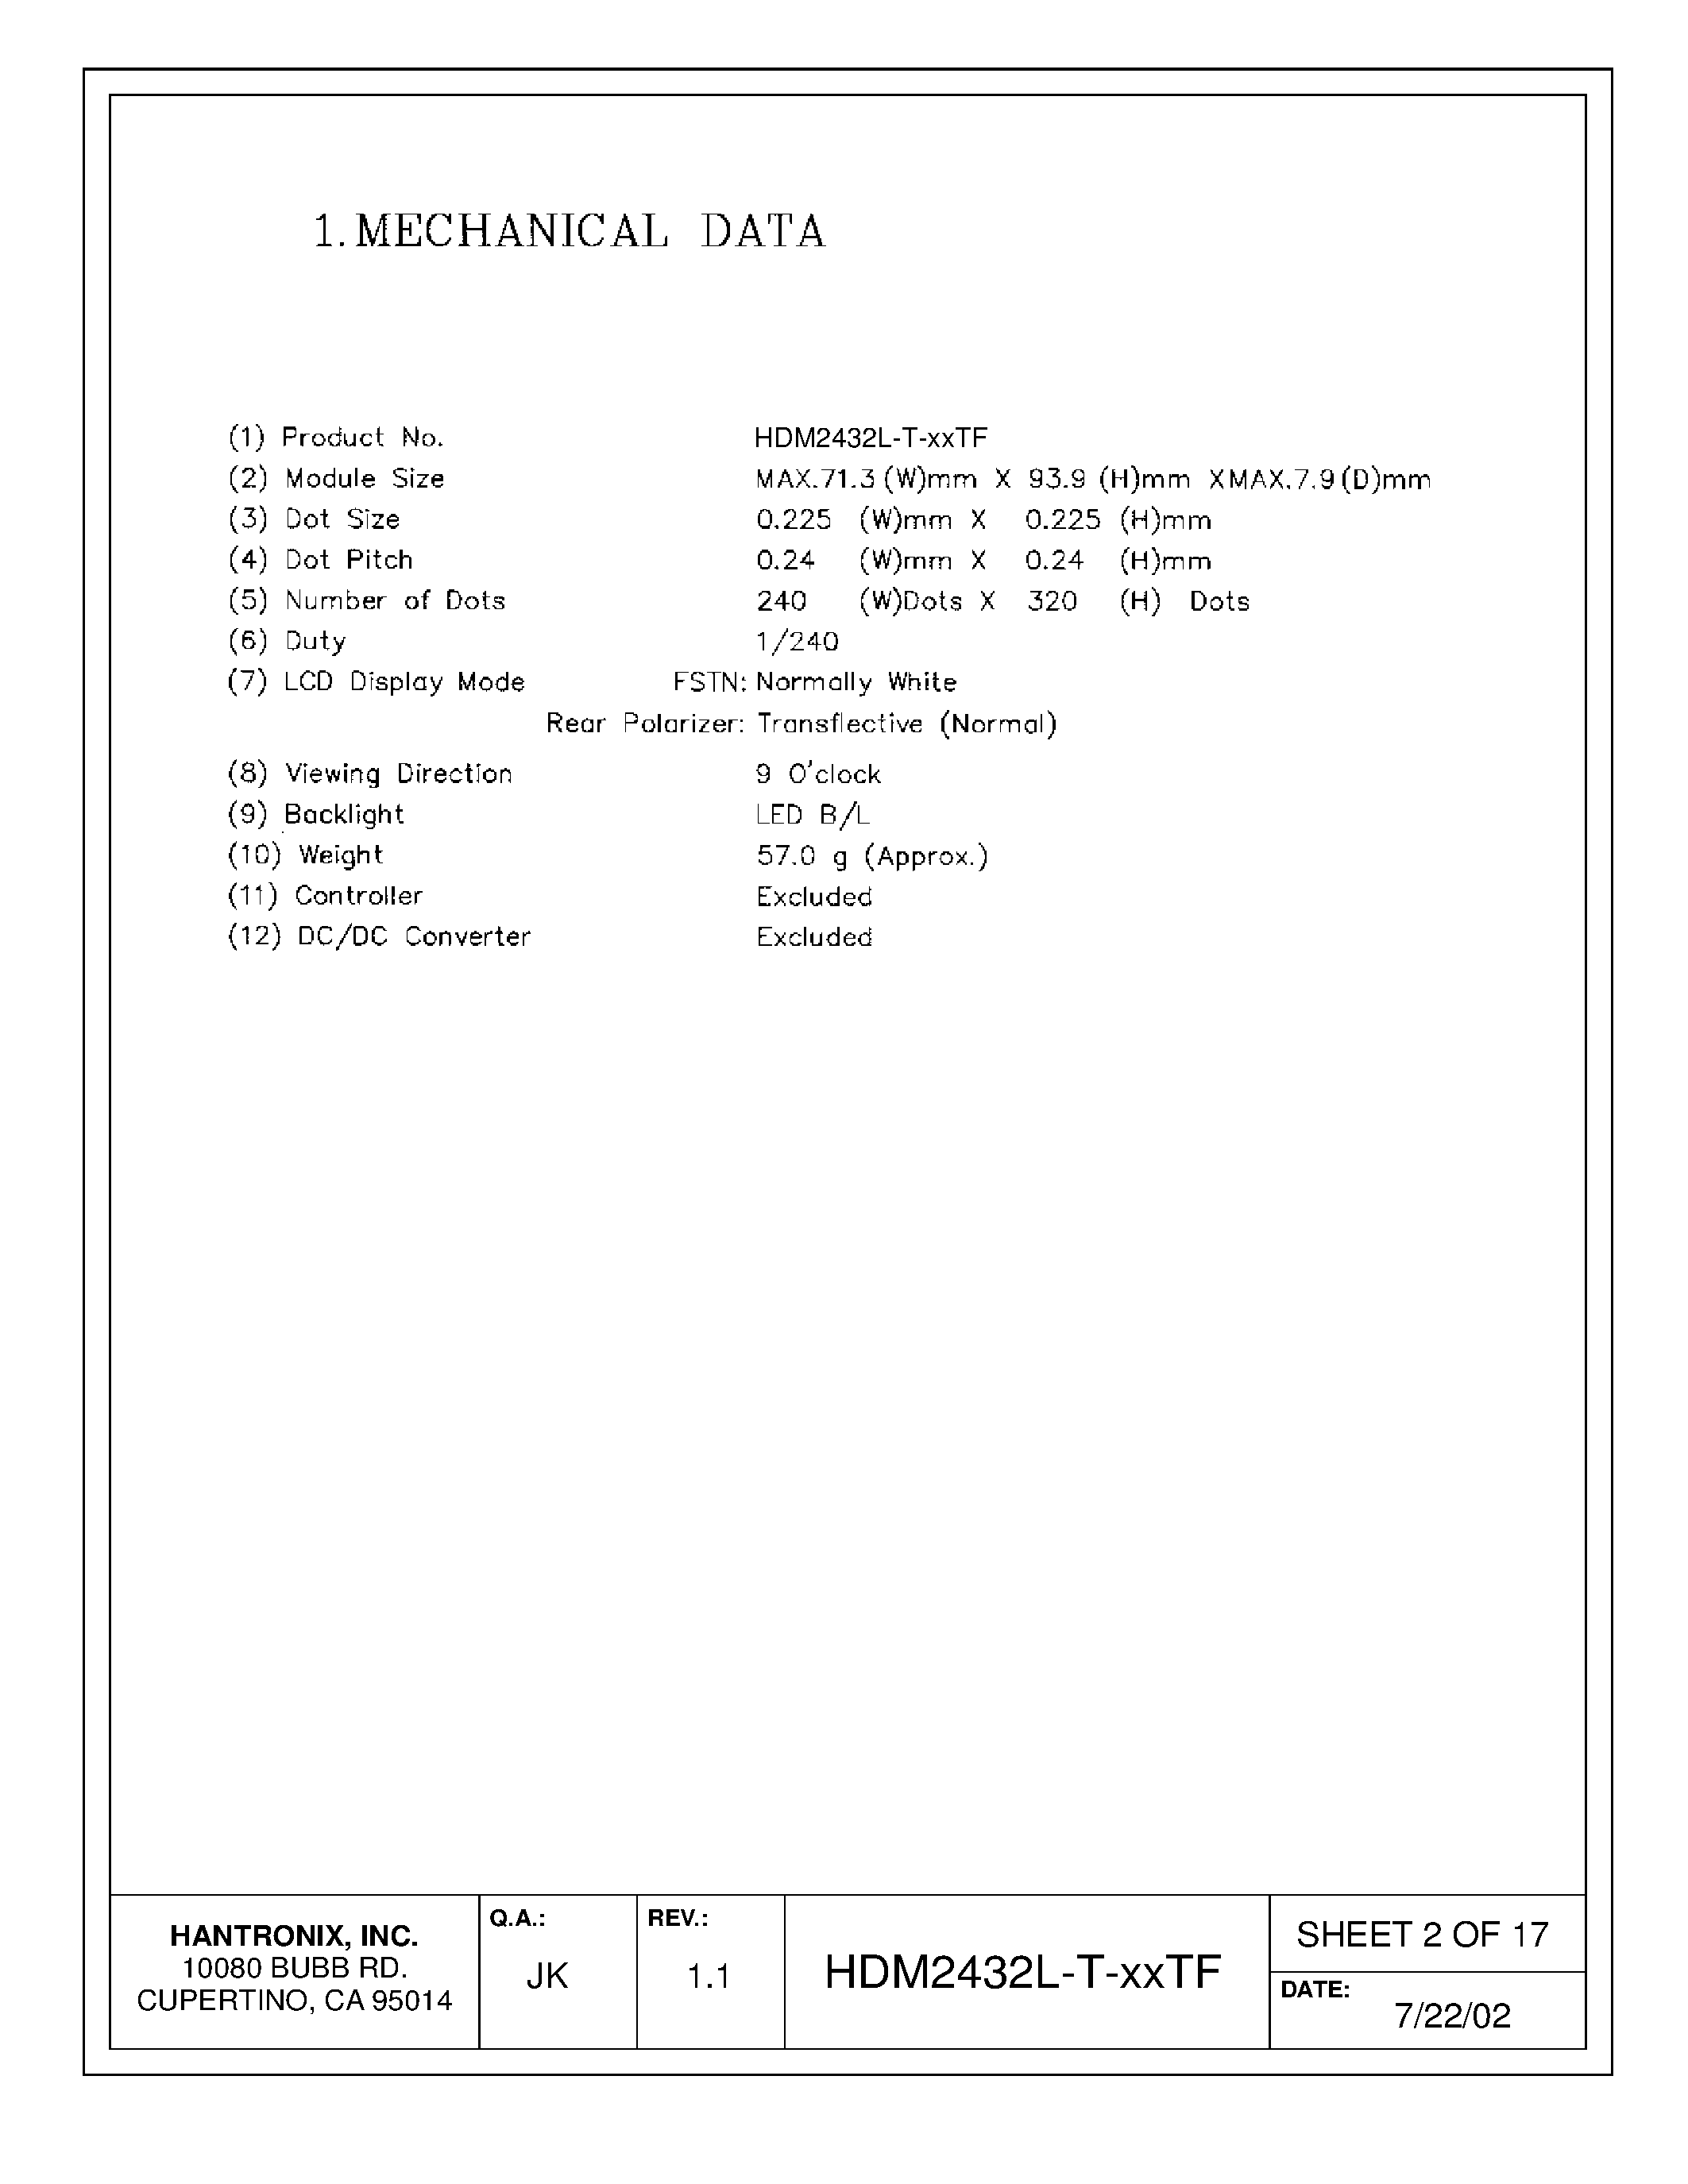 Datasheet HDMs2432l-t-xxtf - LCD DISPLAY MODULE page 2